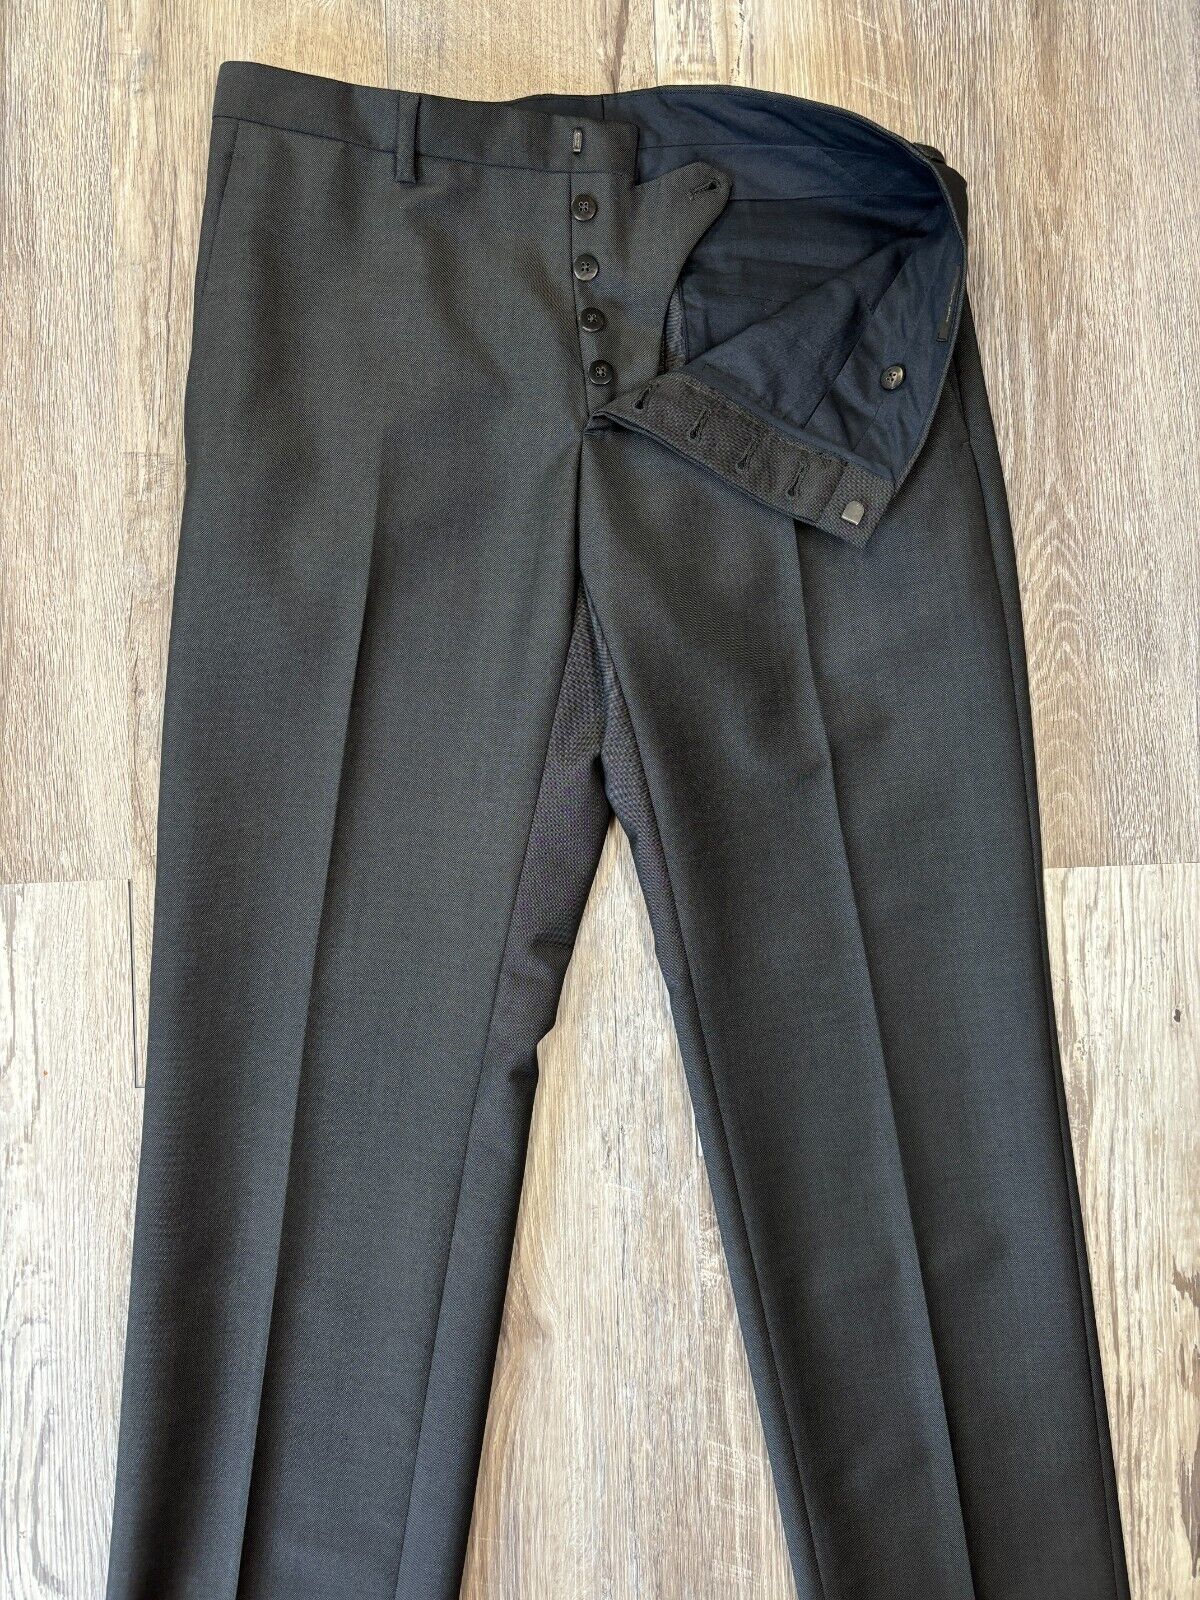 NWOT Jil Sander Wool Mohair Pants Size 30-31 waist (44 EUR)